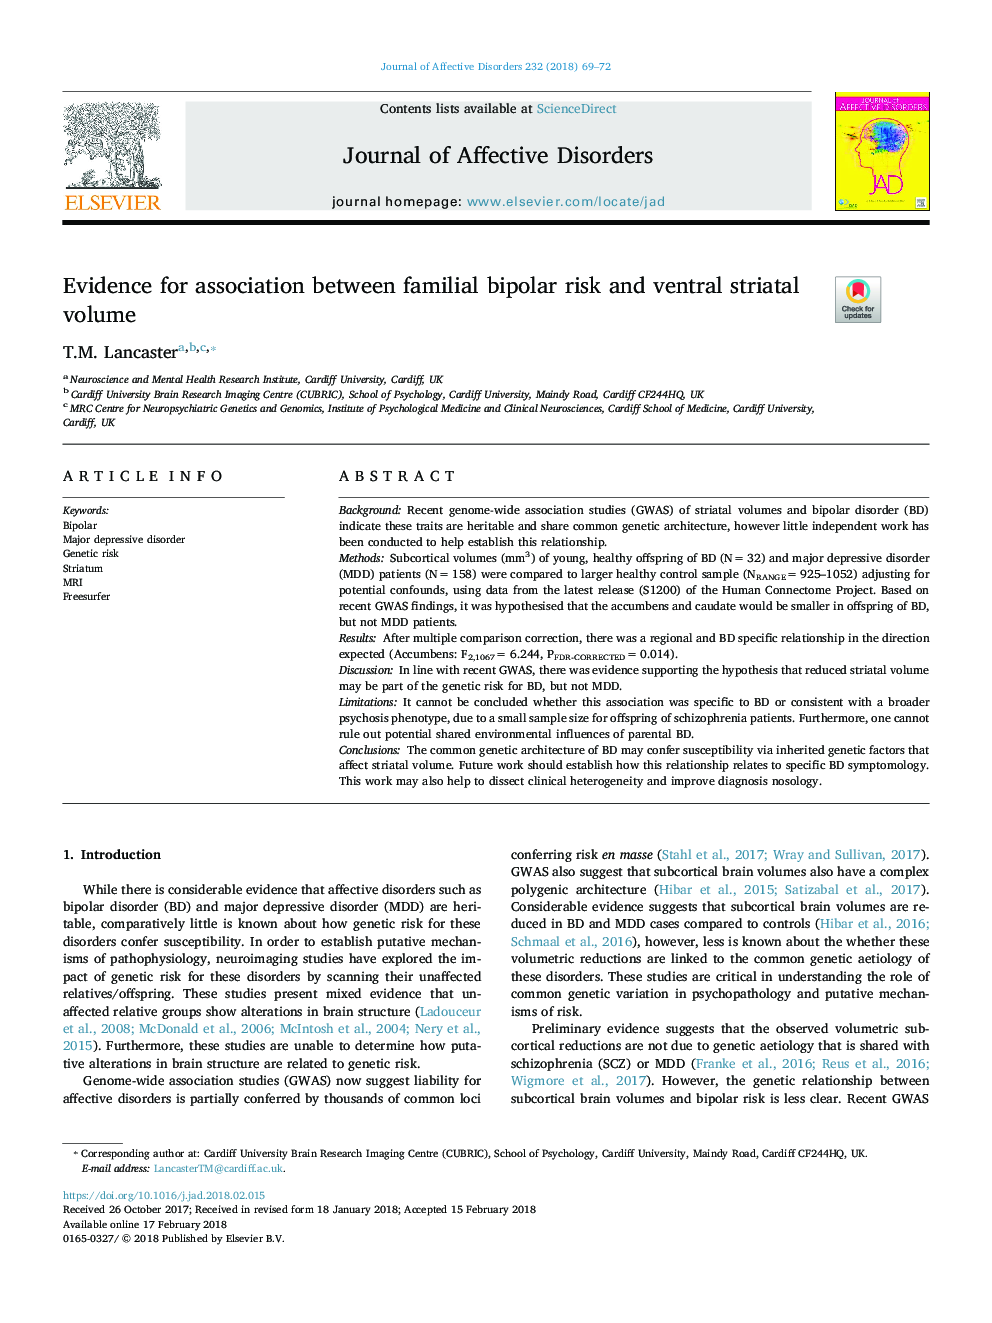 Evidence for association between familial bipolar risk and ventral striatal volume